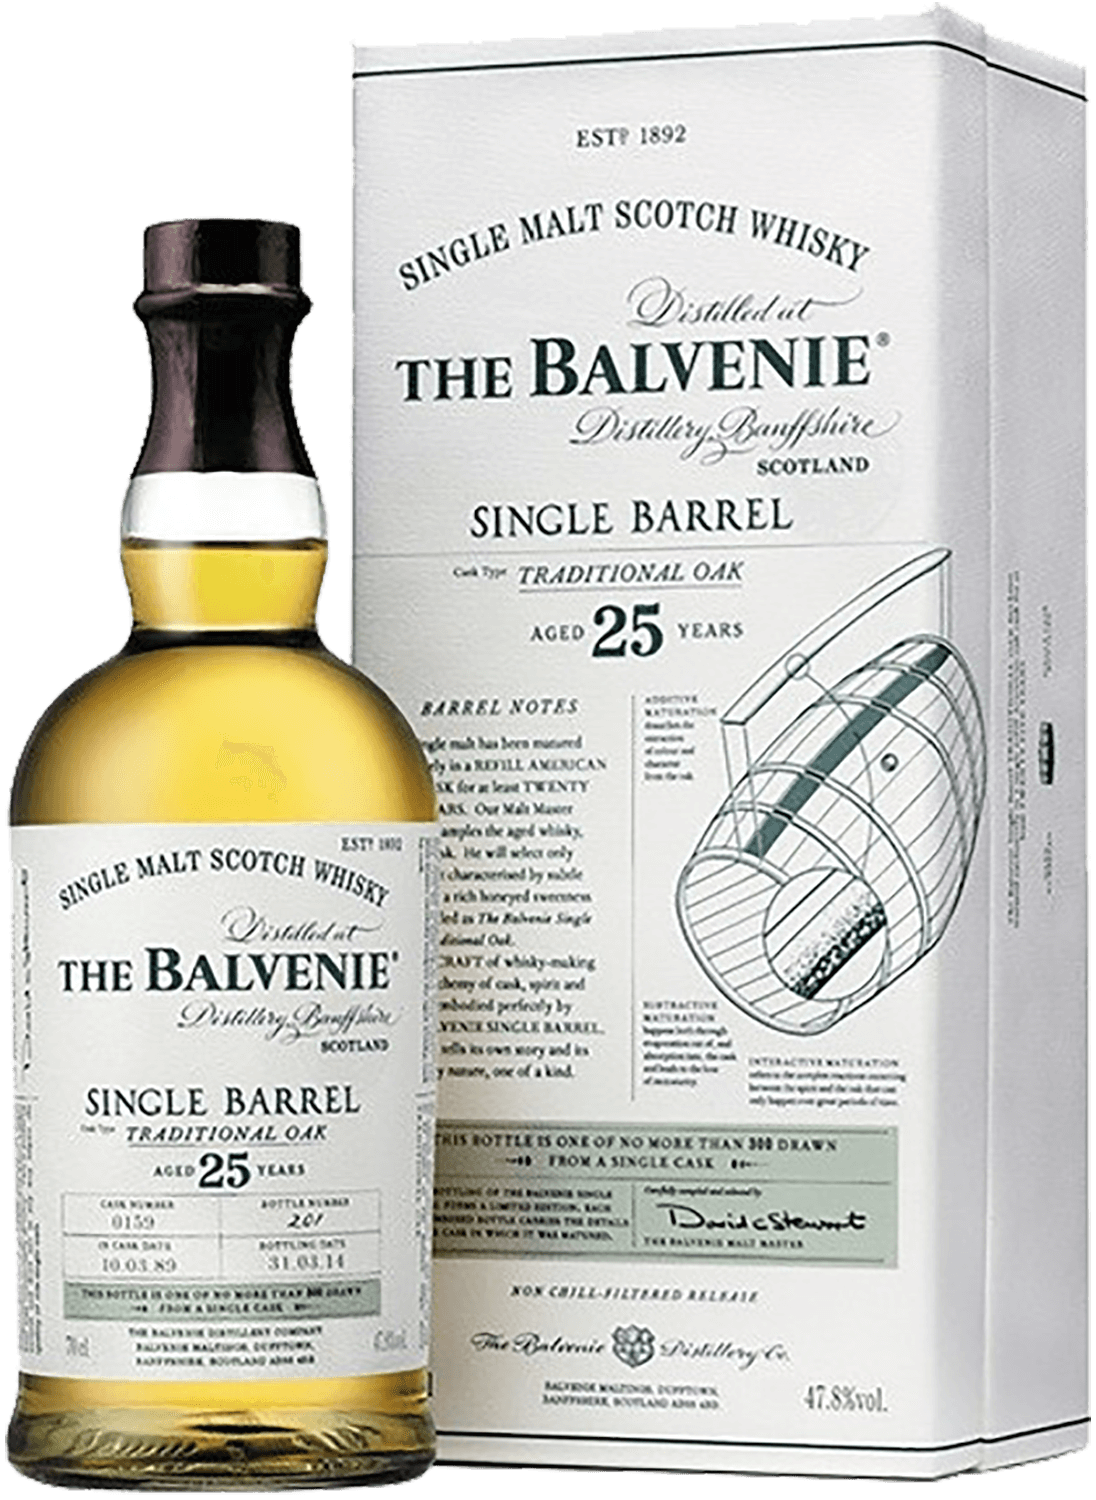 The Balvenie Single Barrel 25 y.o. Single Malt Scotch Whisky (gift box) koval single barrel bourbon whisky